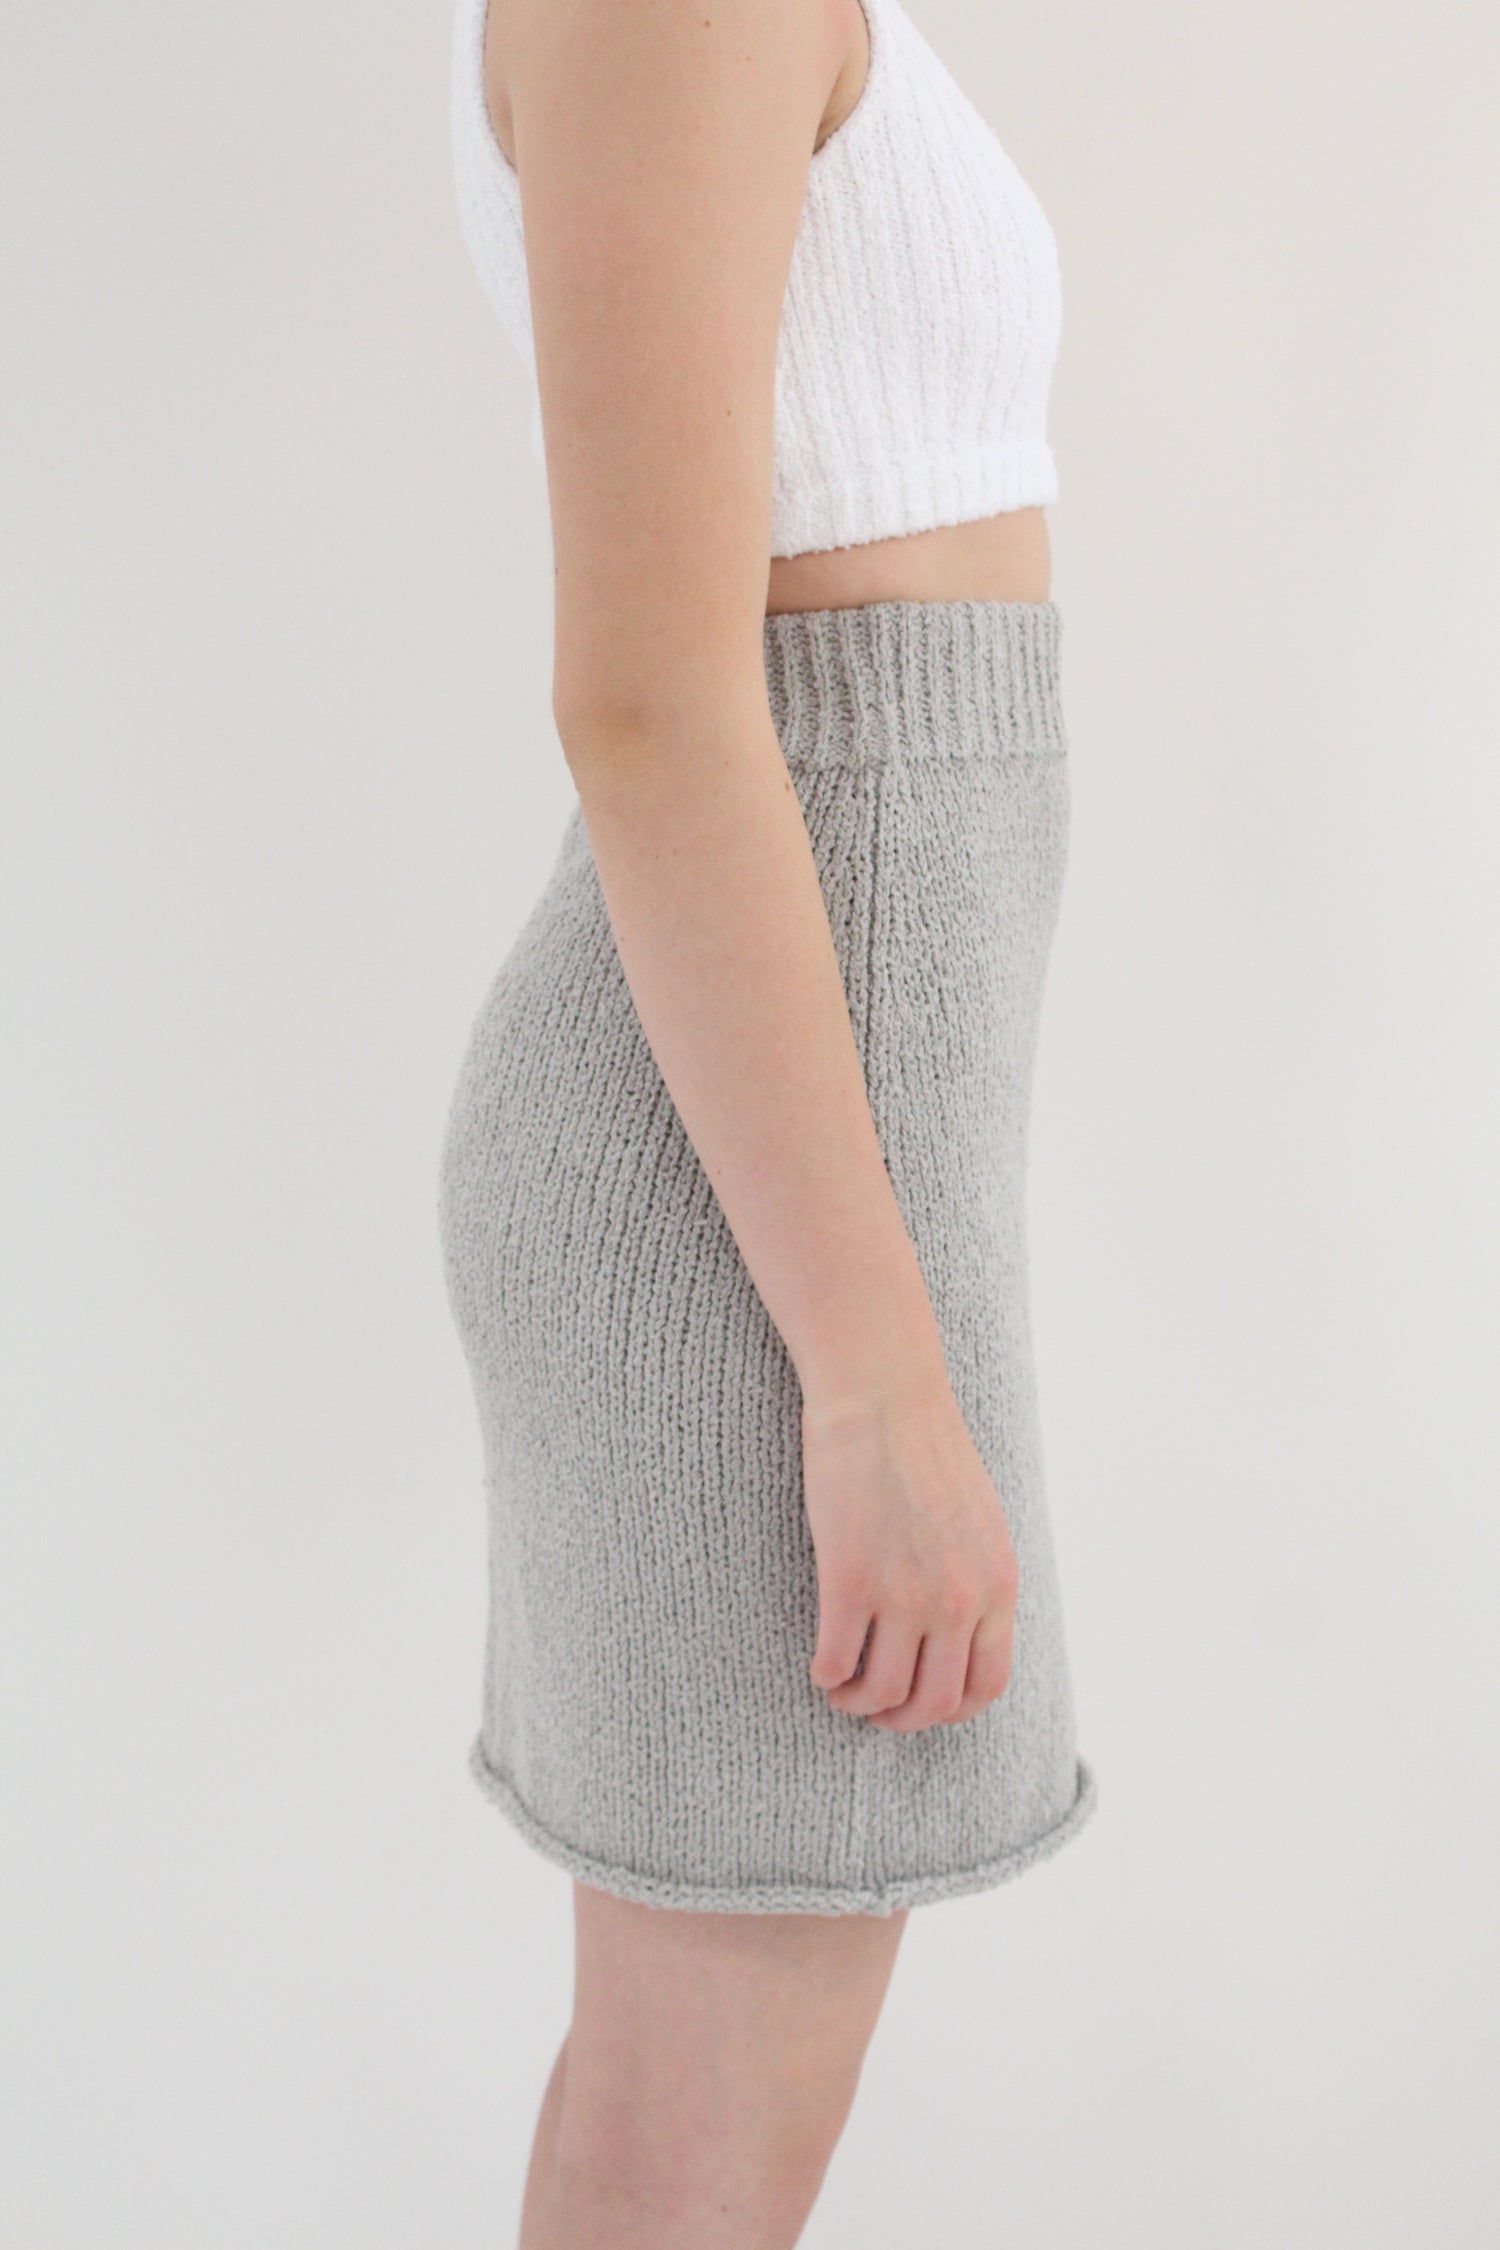 Beklina Bouclé Knit Skirt Grey